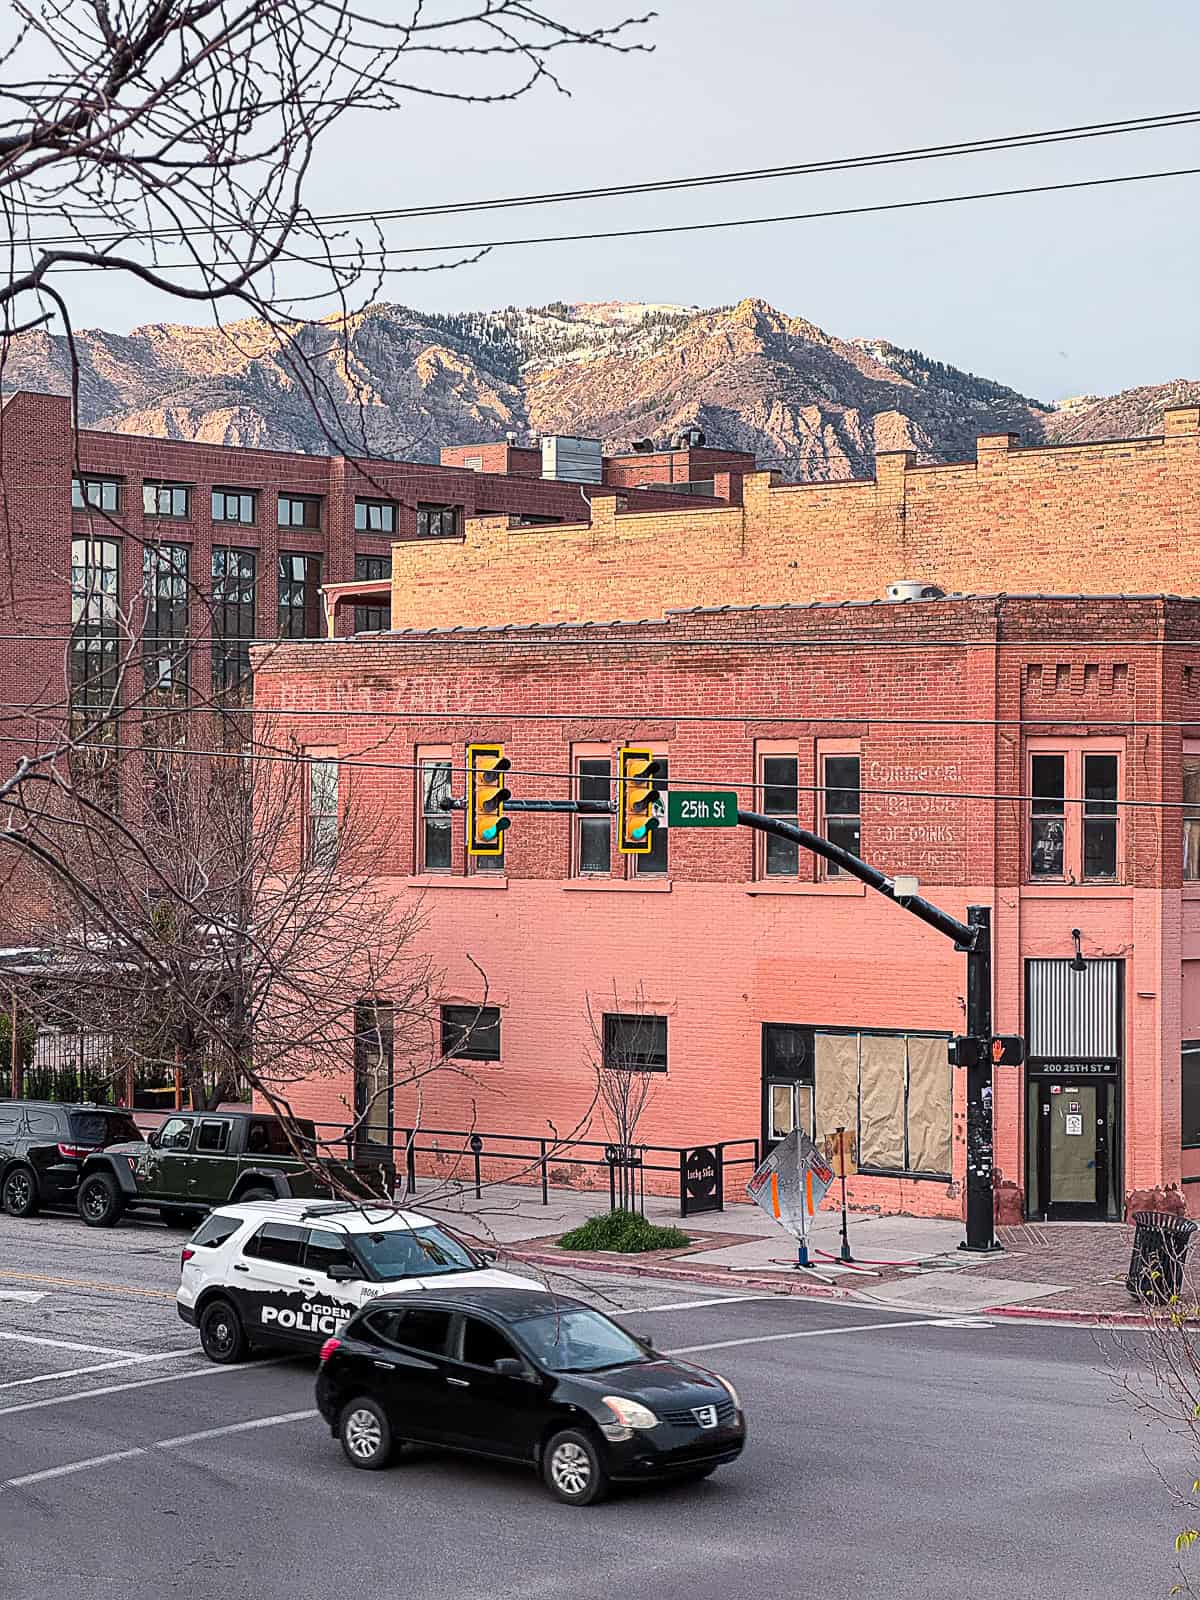 View of 25th street in Ogden in Utah during April